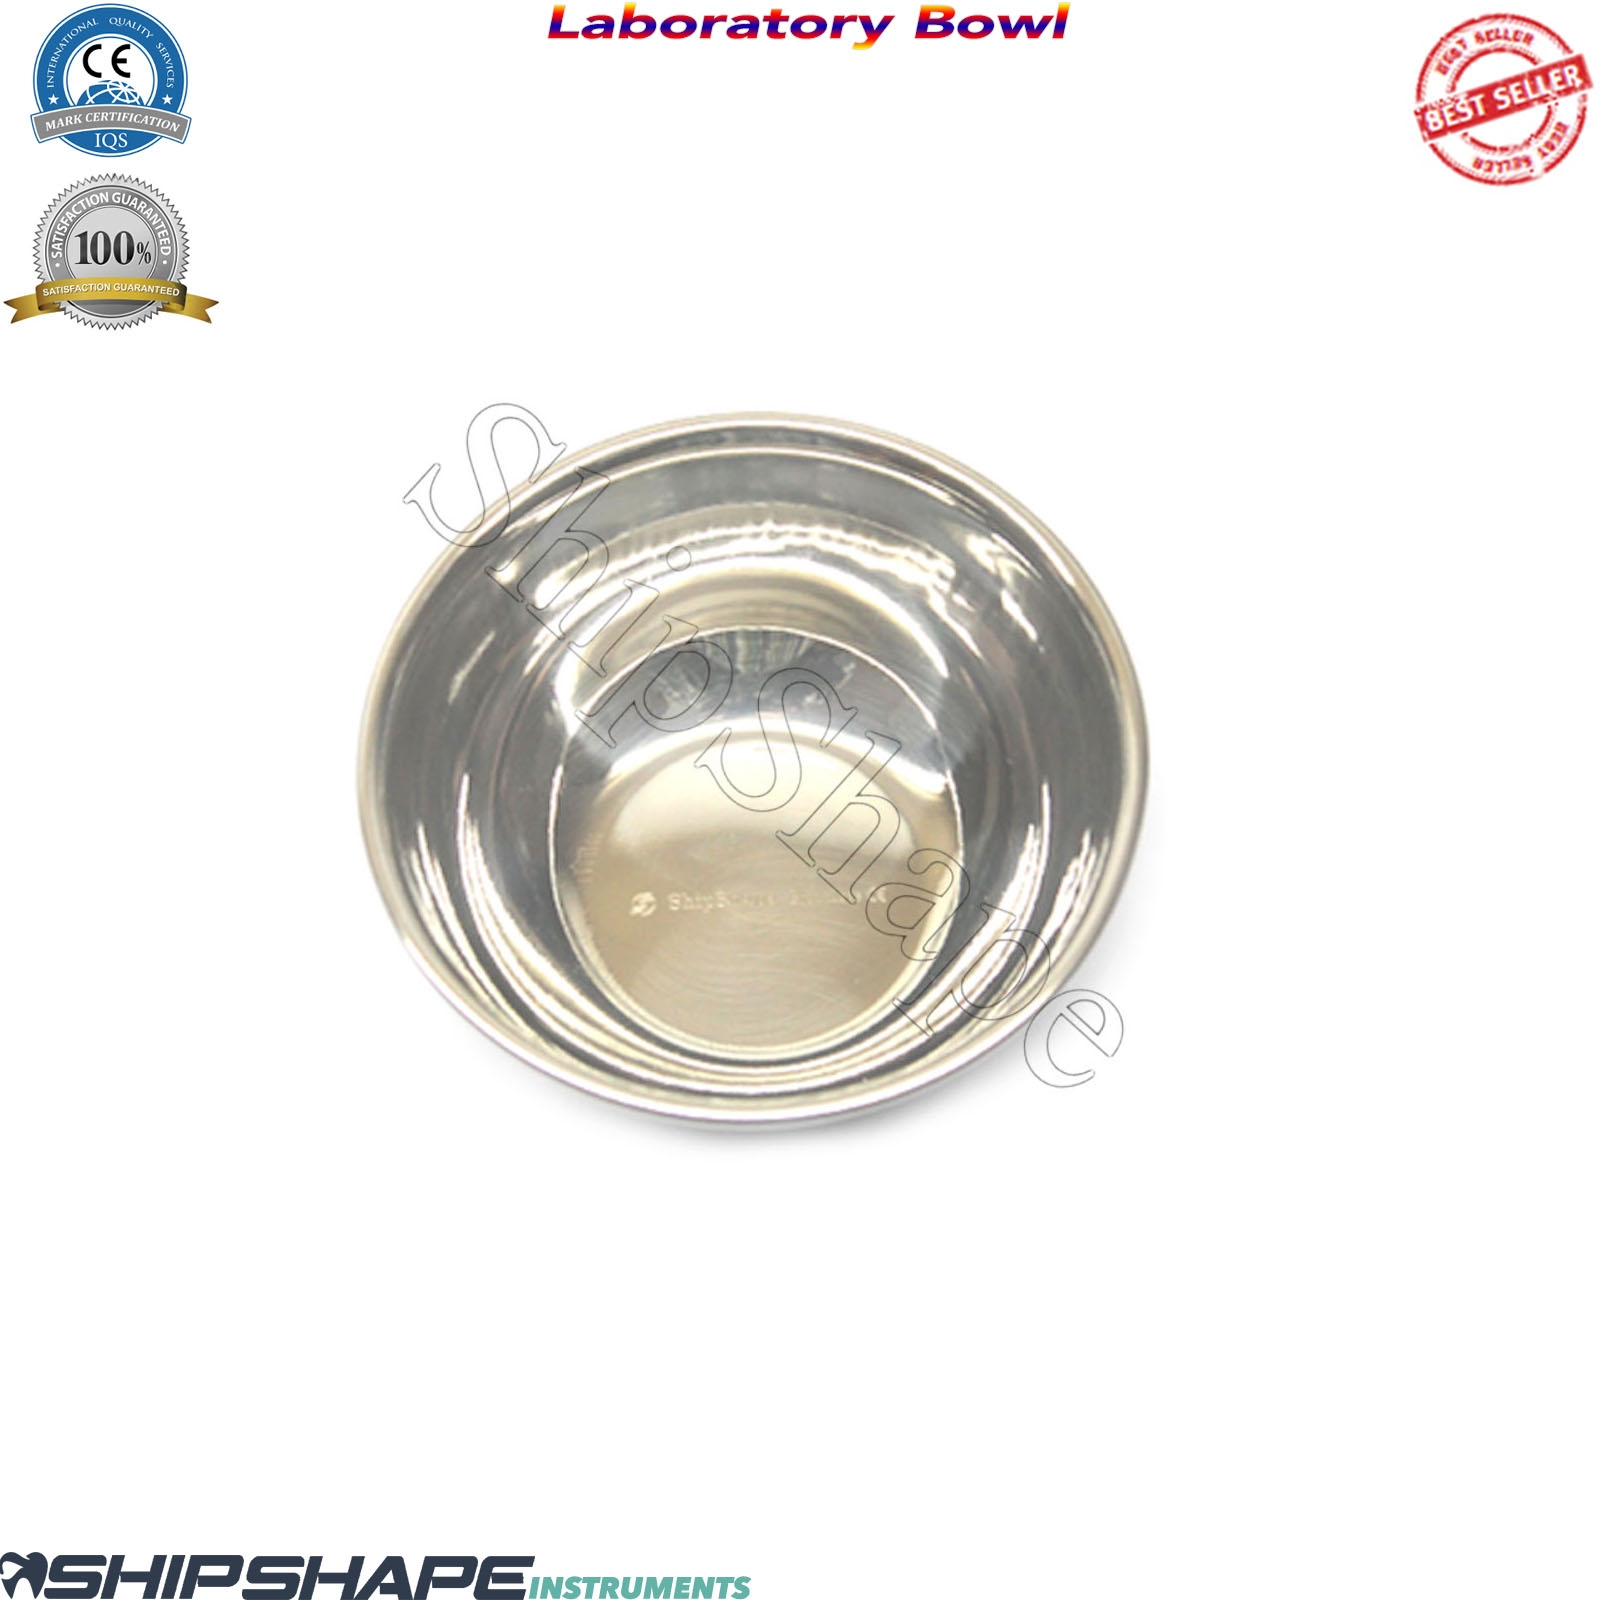 Dental Instrument Bowl, Tray Medical Laboratory Instruments | Shipshape Instruments-0